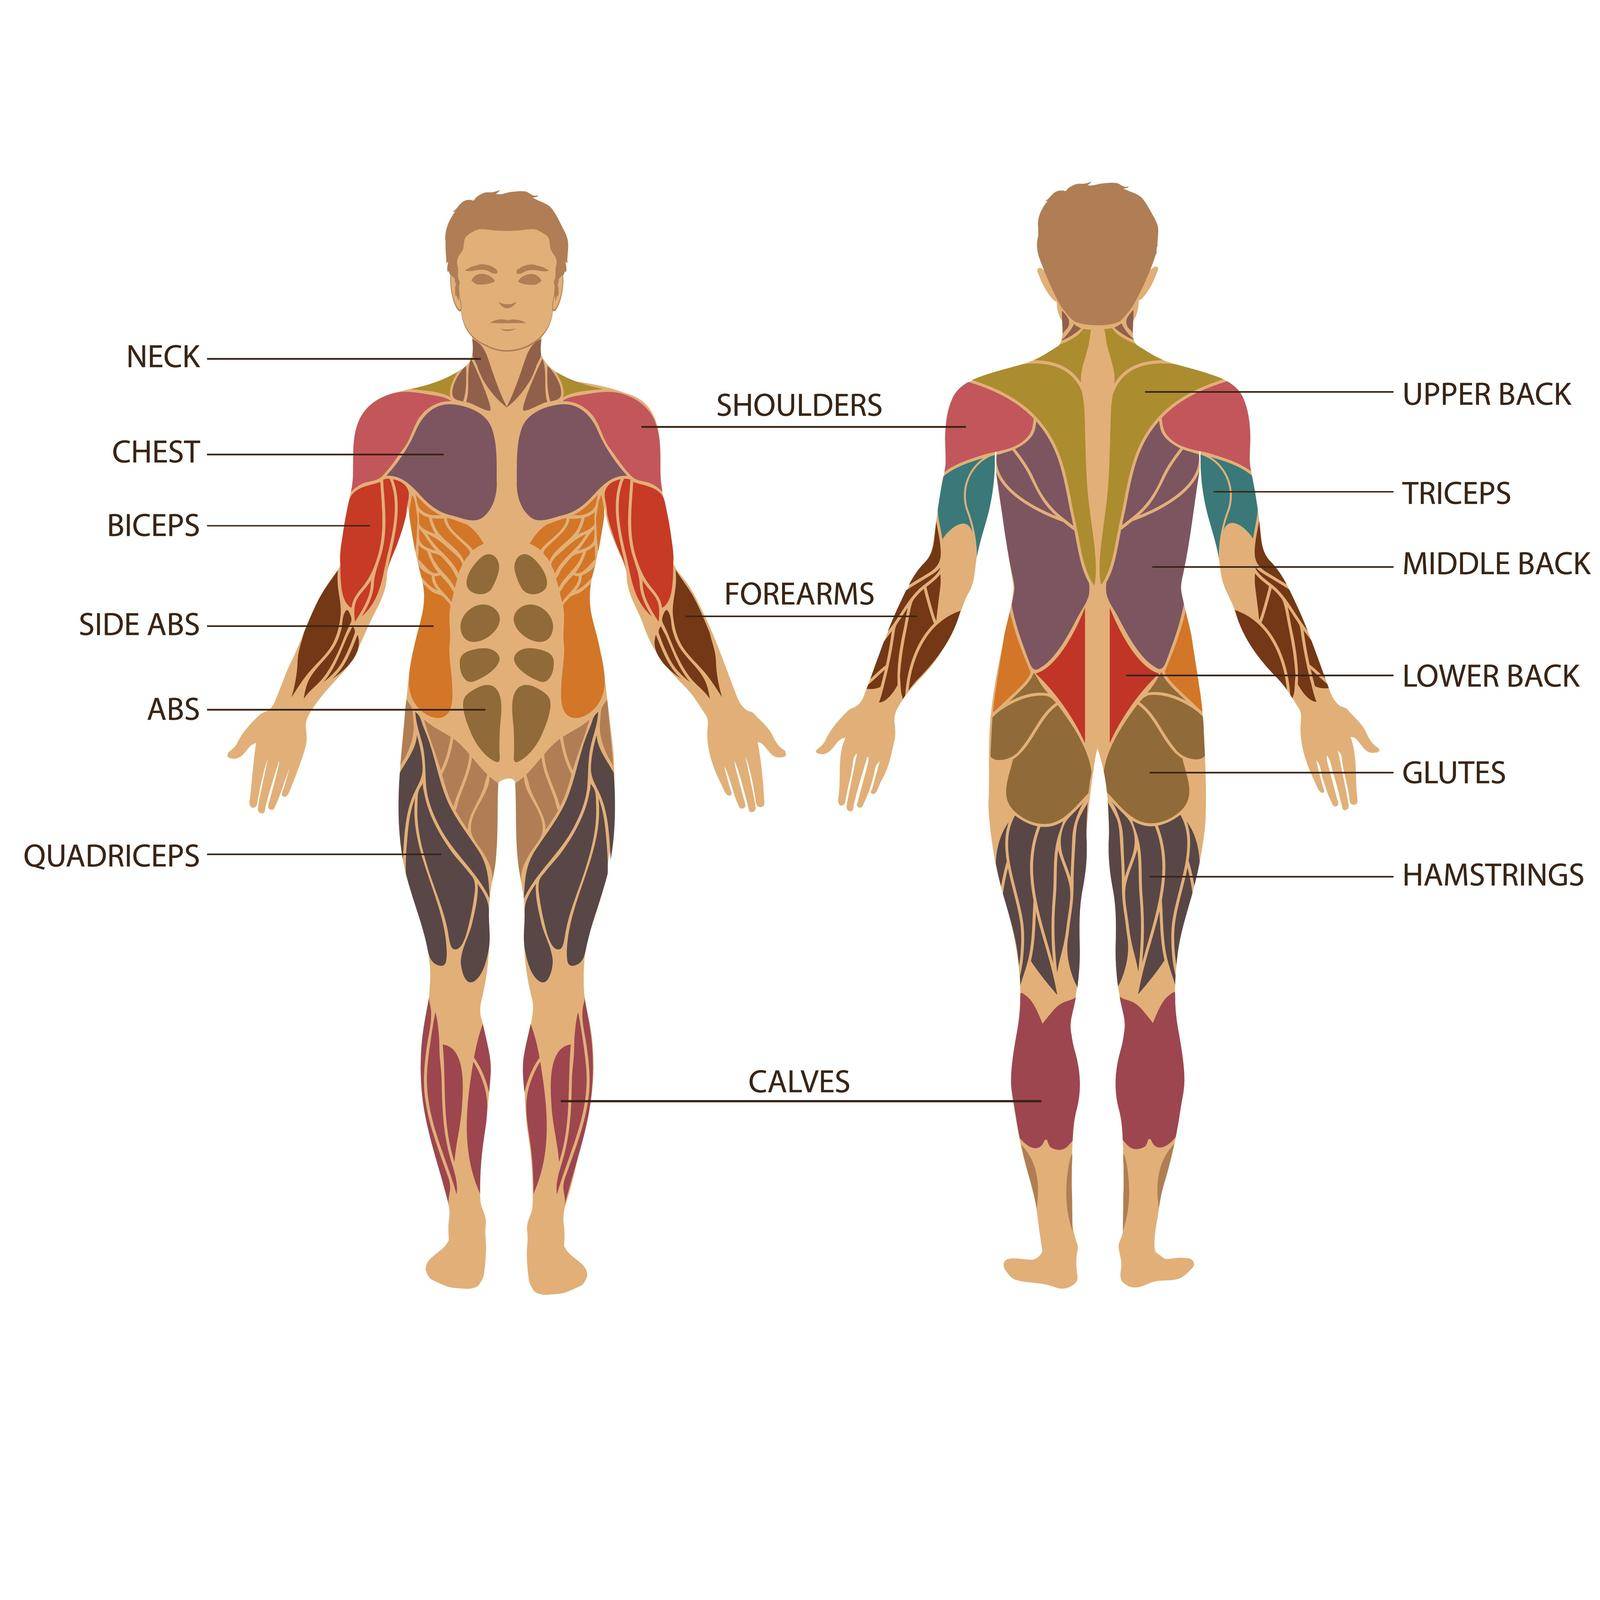 vector muscular human body, muscle man anatomy